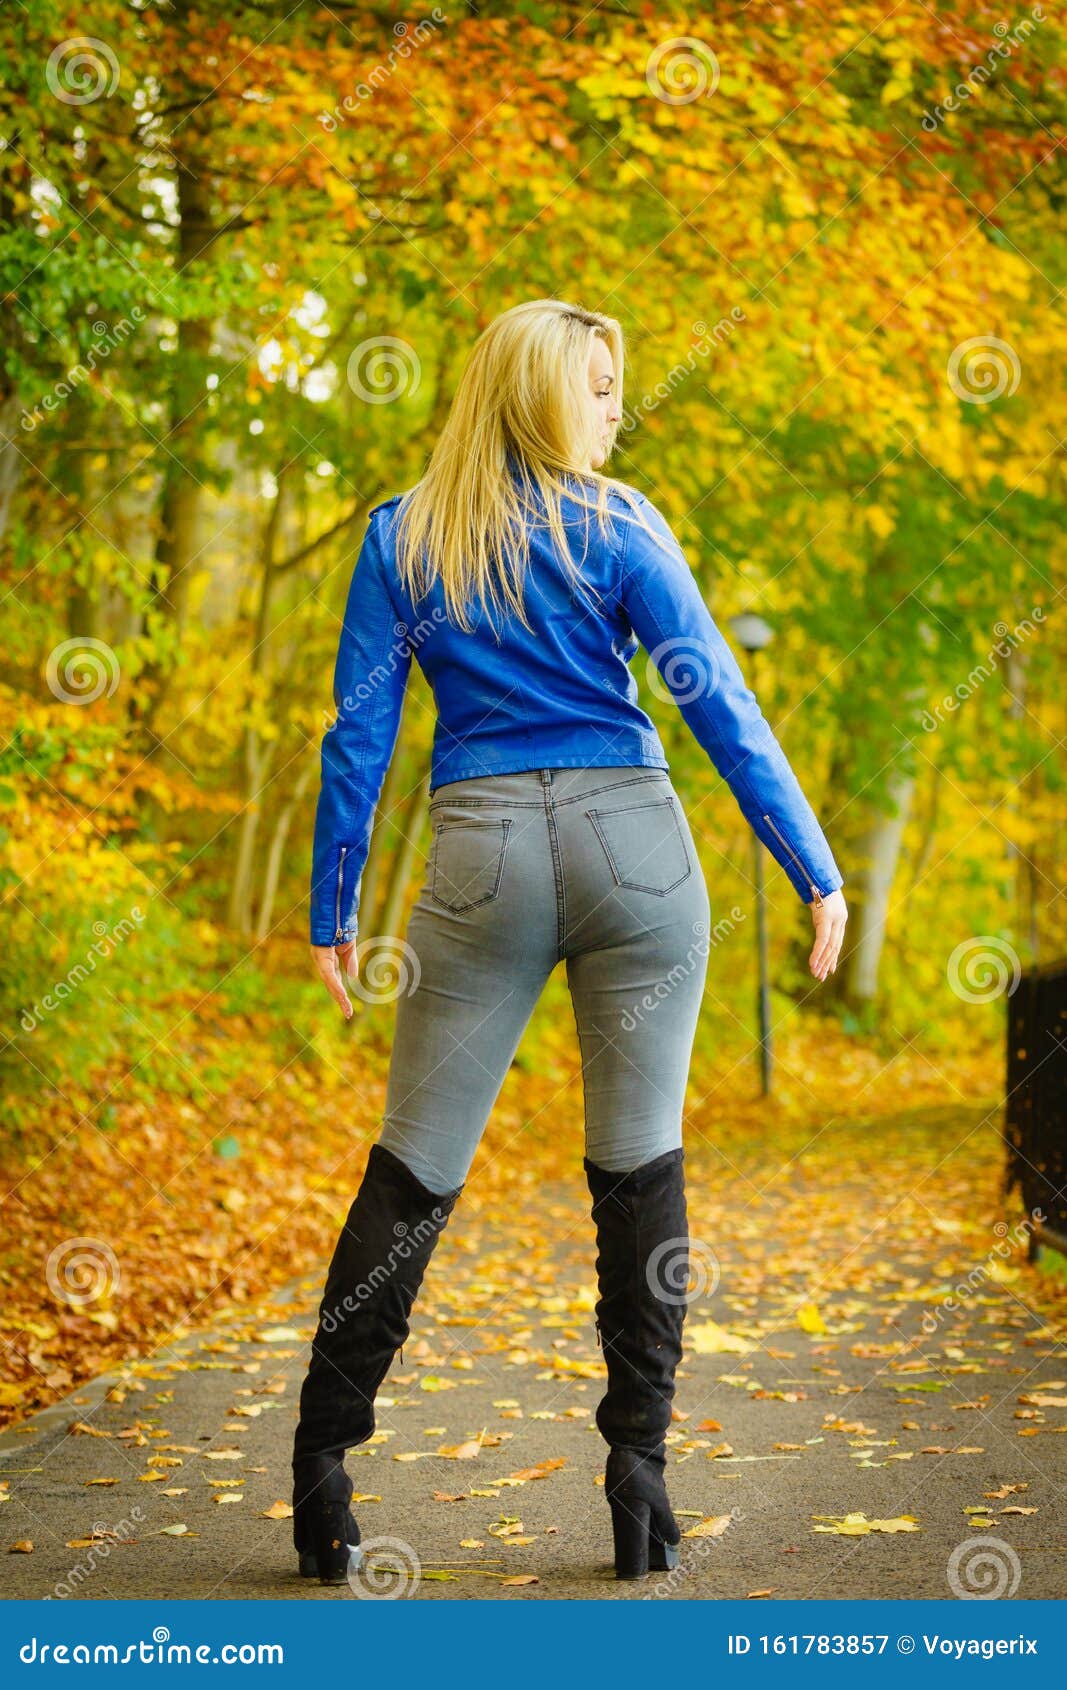 Female Wearing Autumn Outfit Stock Image - Image of walk, fashion ...